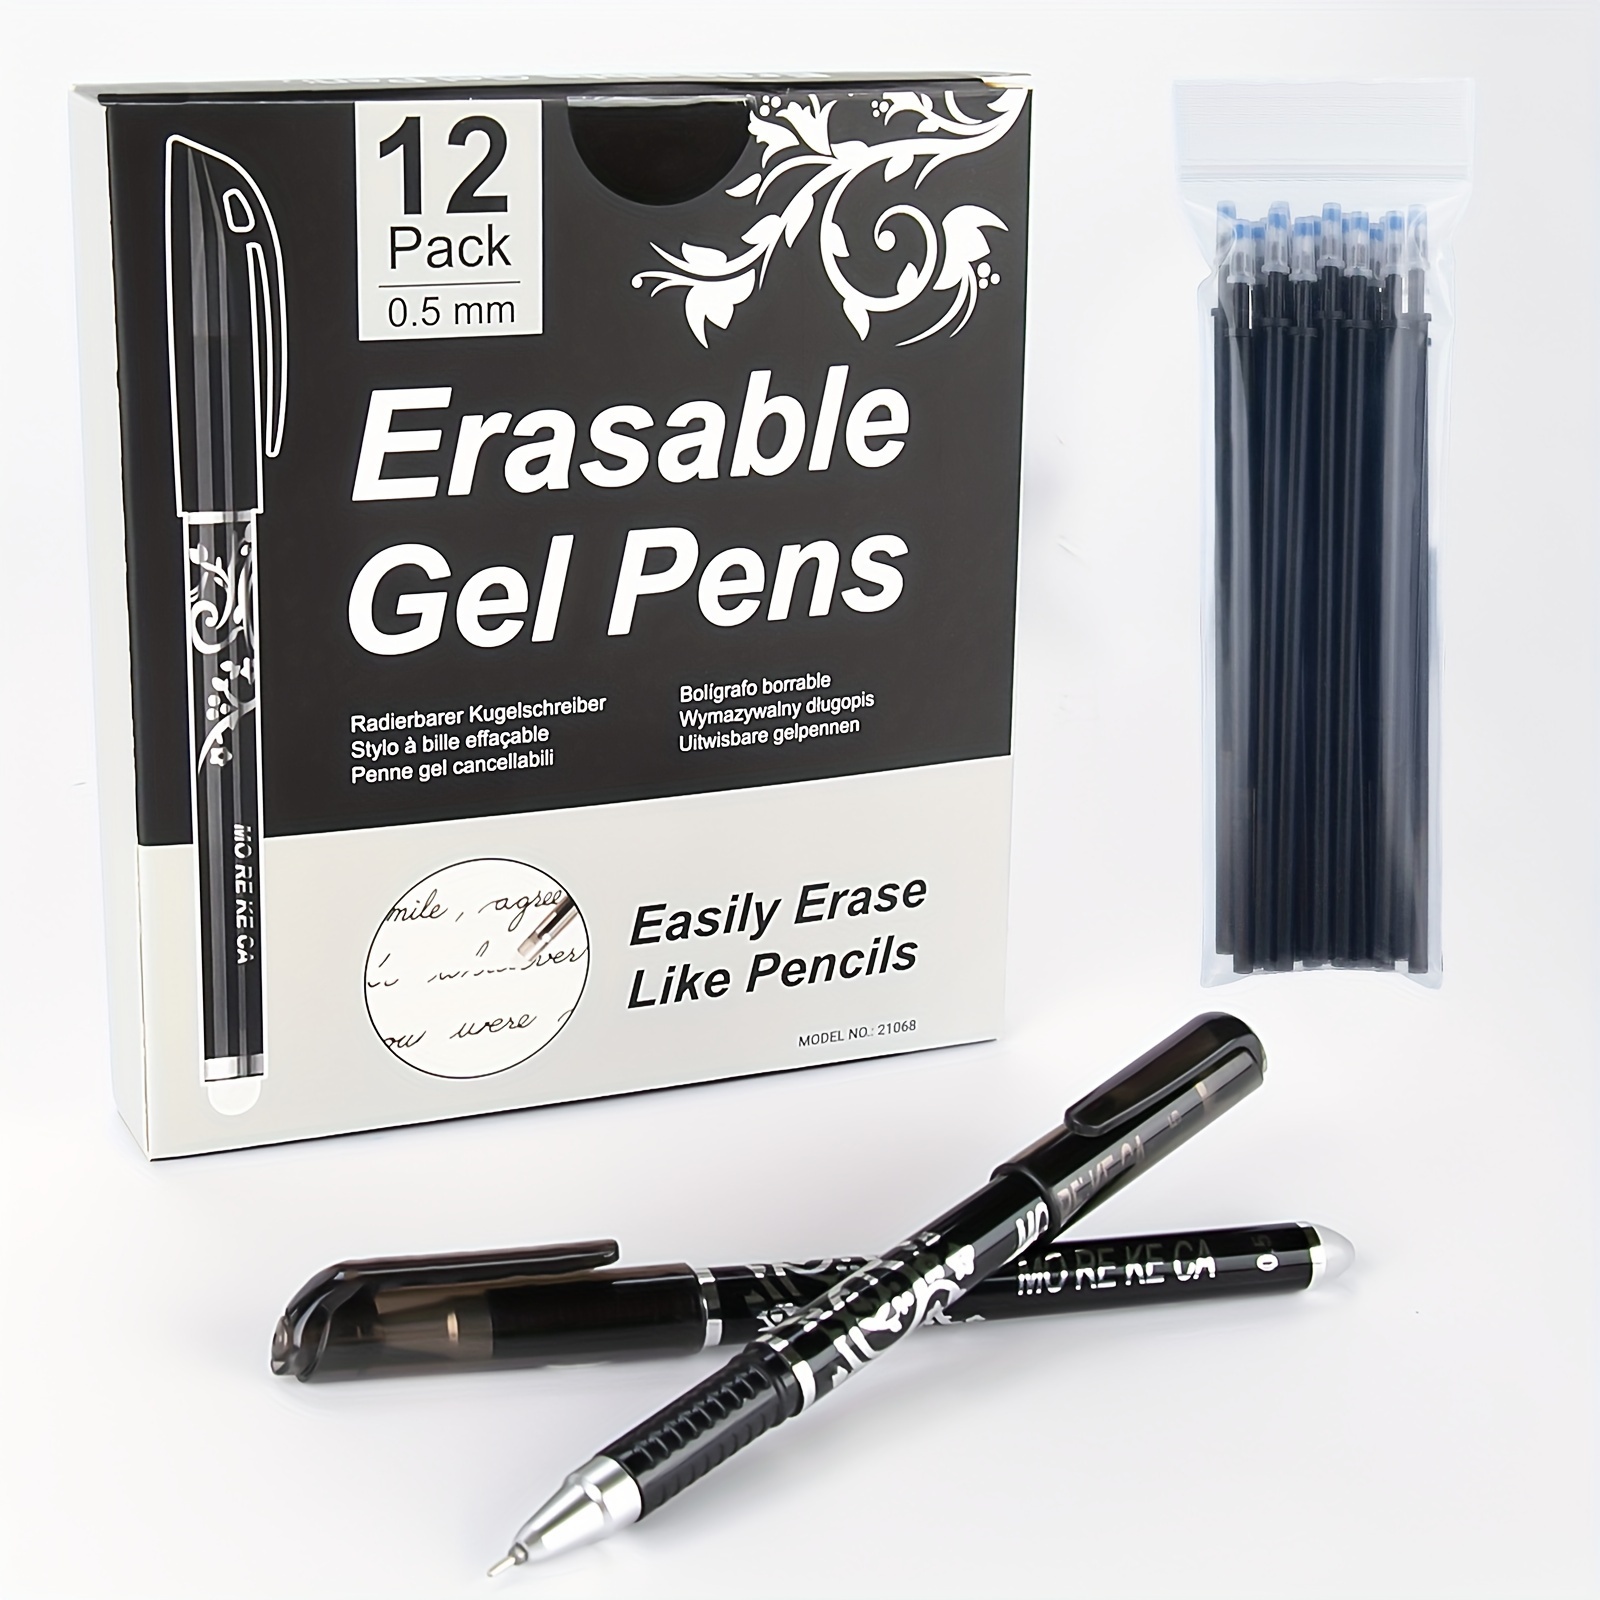 Arteza Liquid Micro-Line Pen, Black Japanese Ink, Assorted Nibs - Set of 9